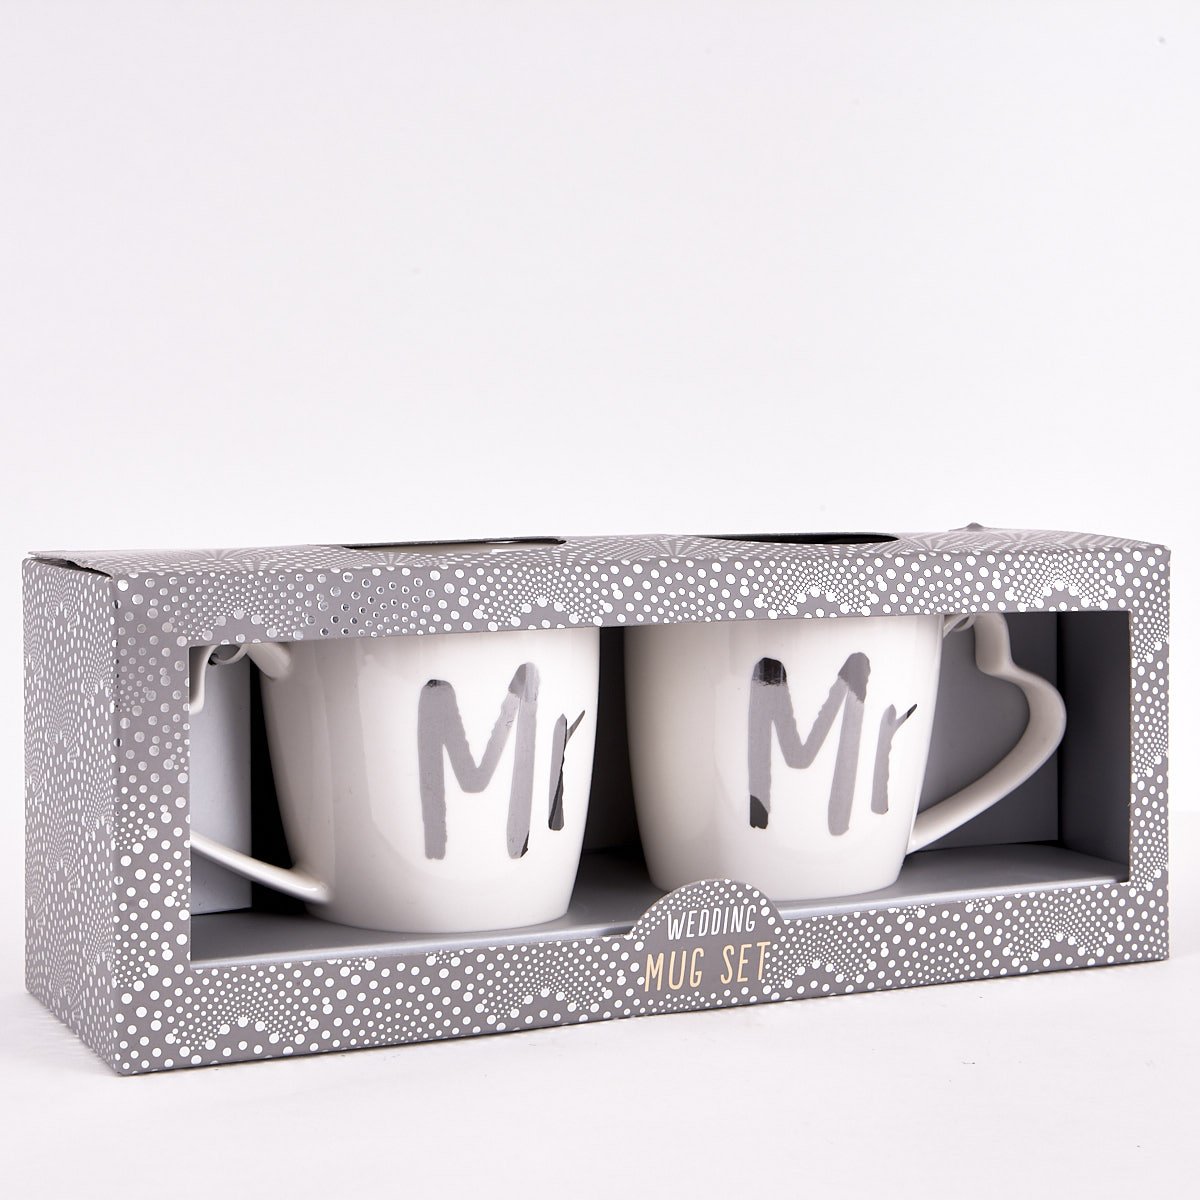 Mr & Mr Wedding Mug Set